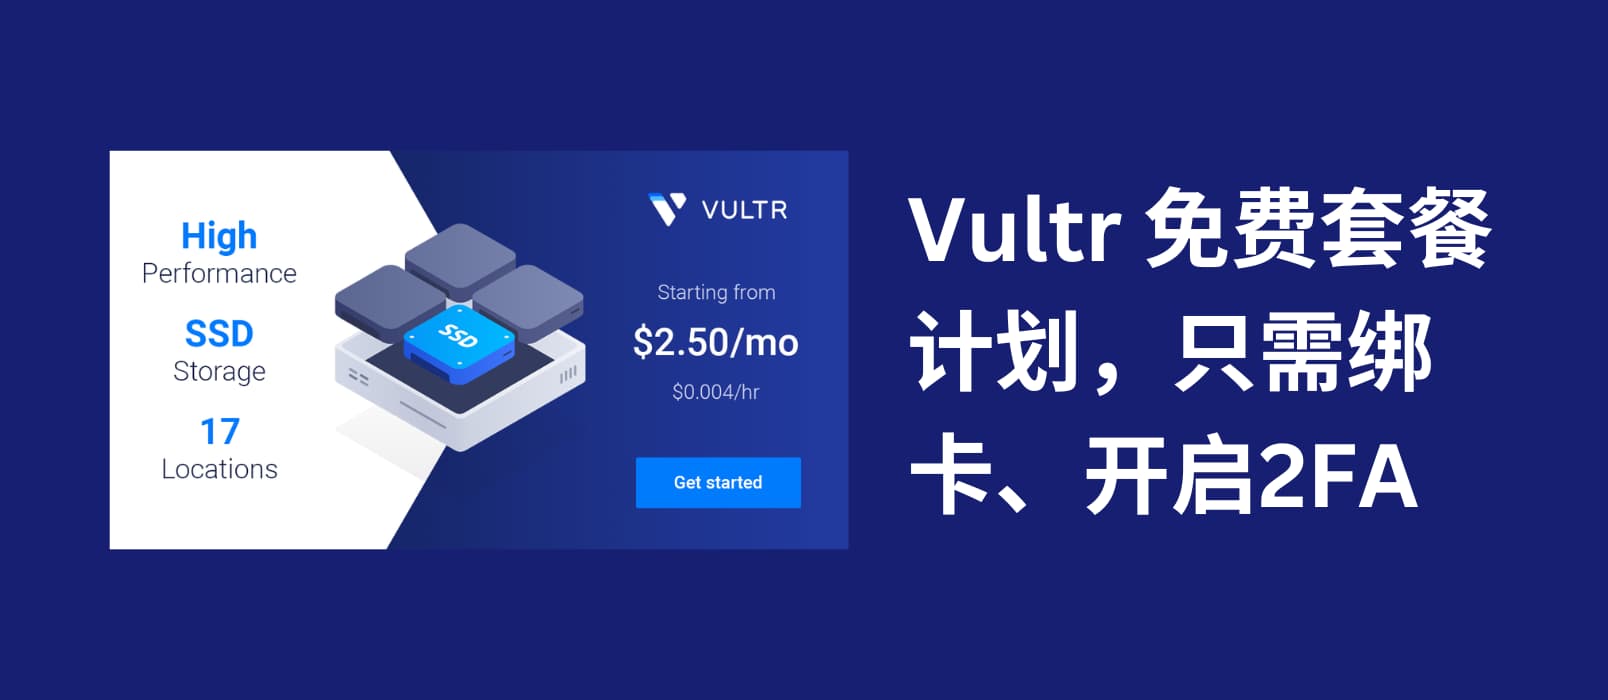 Vultr 推出免费套餐计划，只需绑卡、2FA 即可申请 1